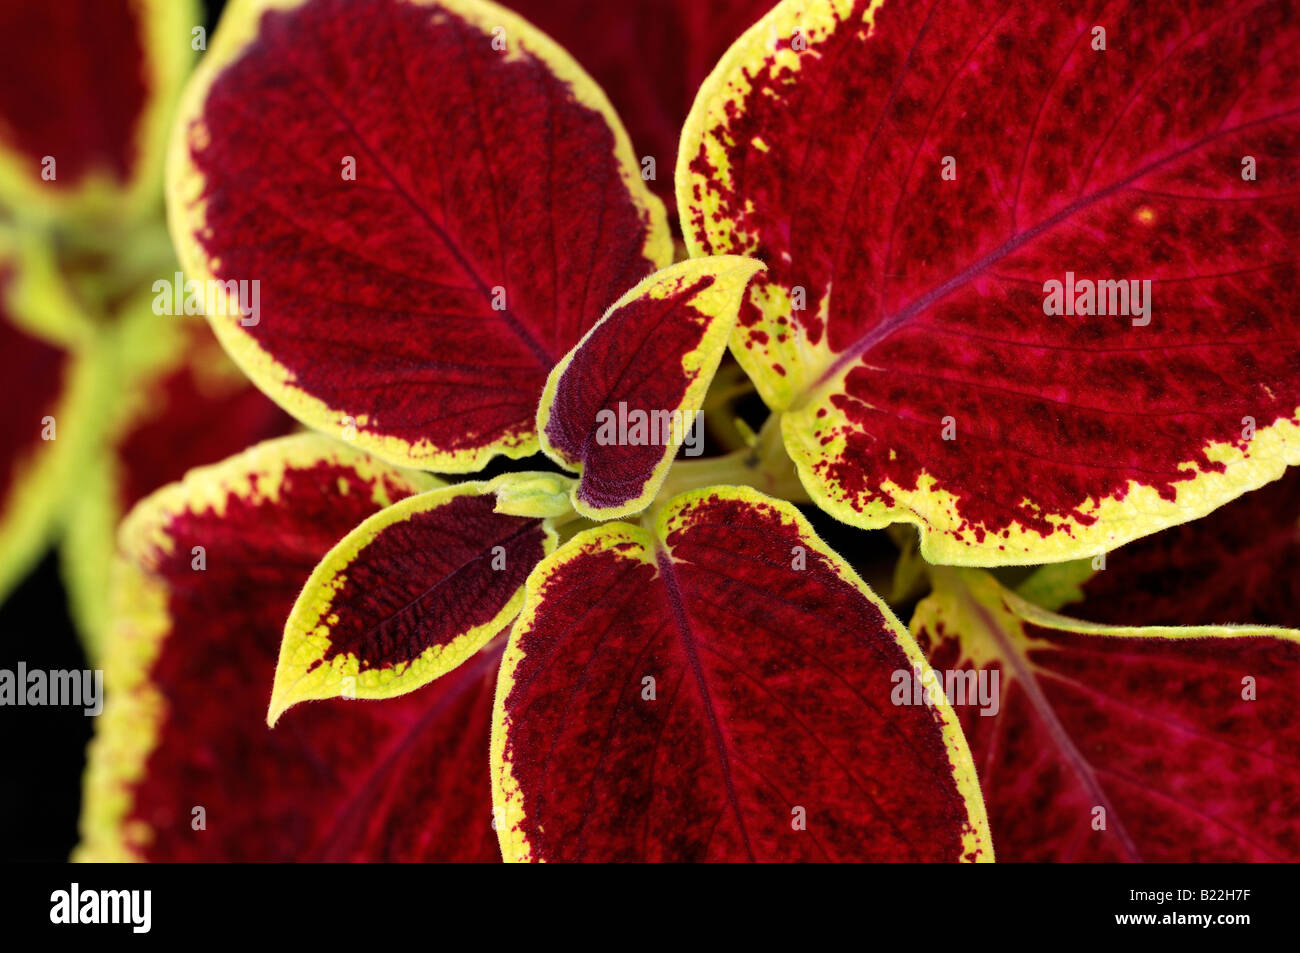 coleus wizard scarlet cultivar sp var variant red bright leaves closeup close up detail macro Stock Photo